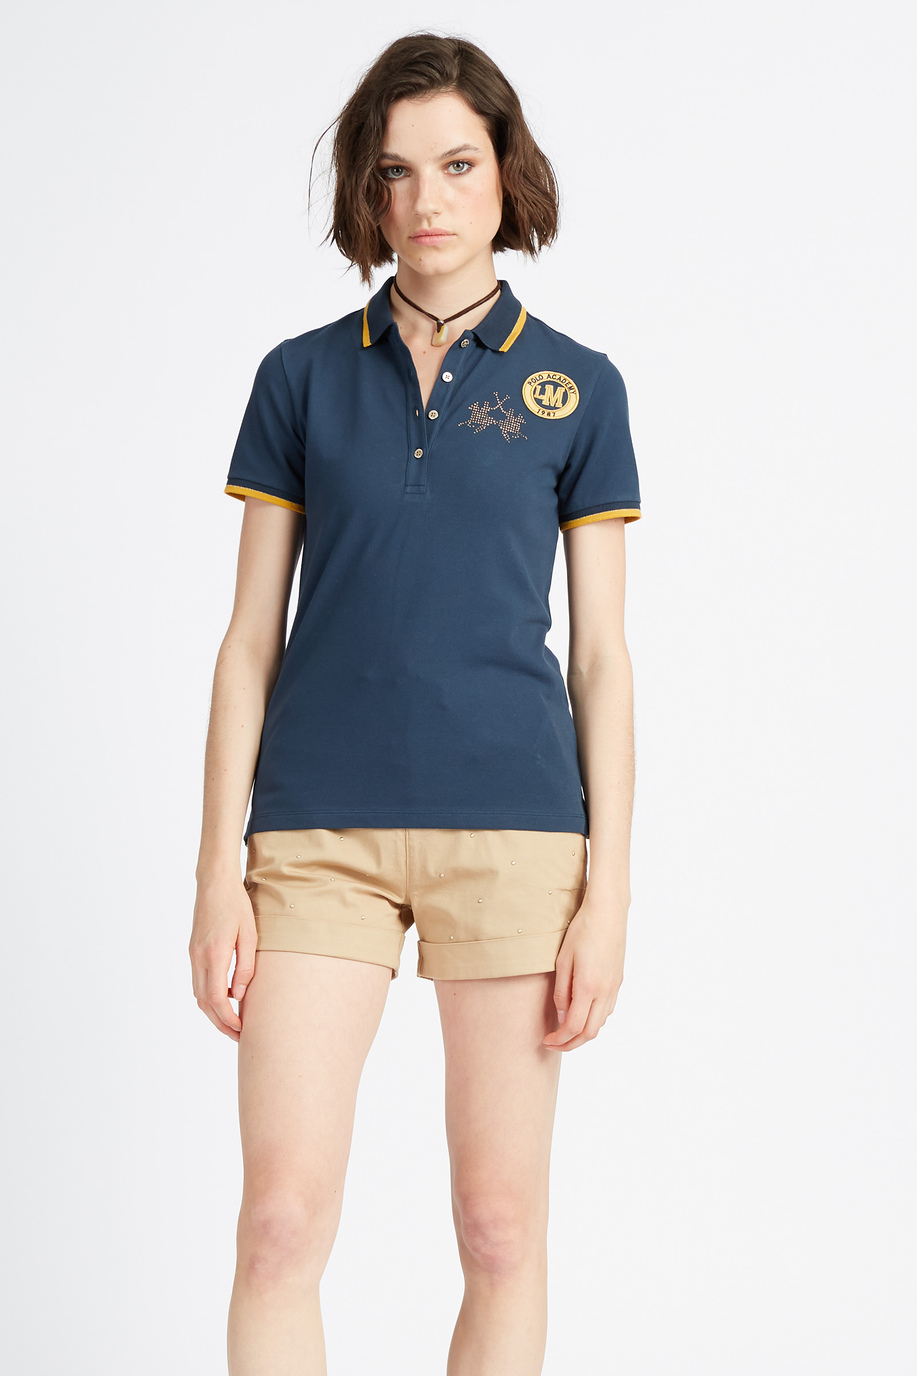 Kurzärmliges Damen-Poloshirt mit Pailletten-Logo und Polo Academy-Patch - Varka - Damen | La Martina - Official Online Shop